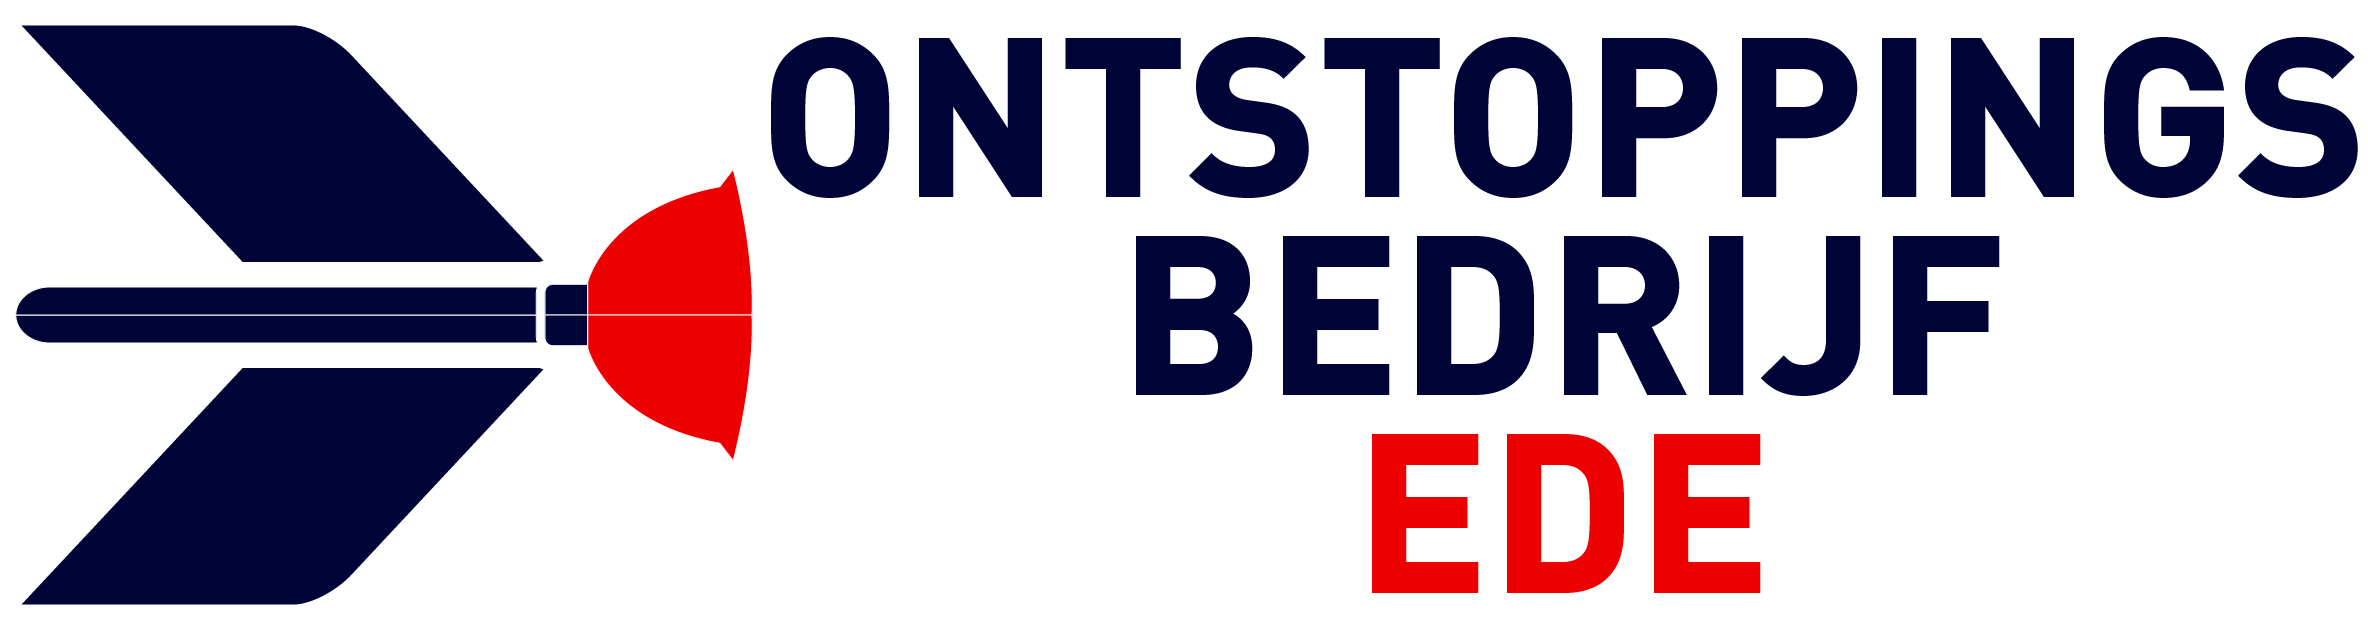 Ontstoppingsbedrijf Ede logo